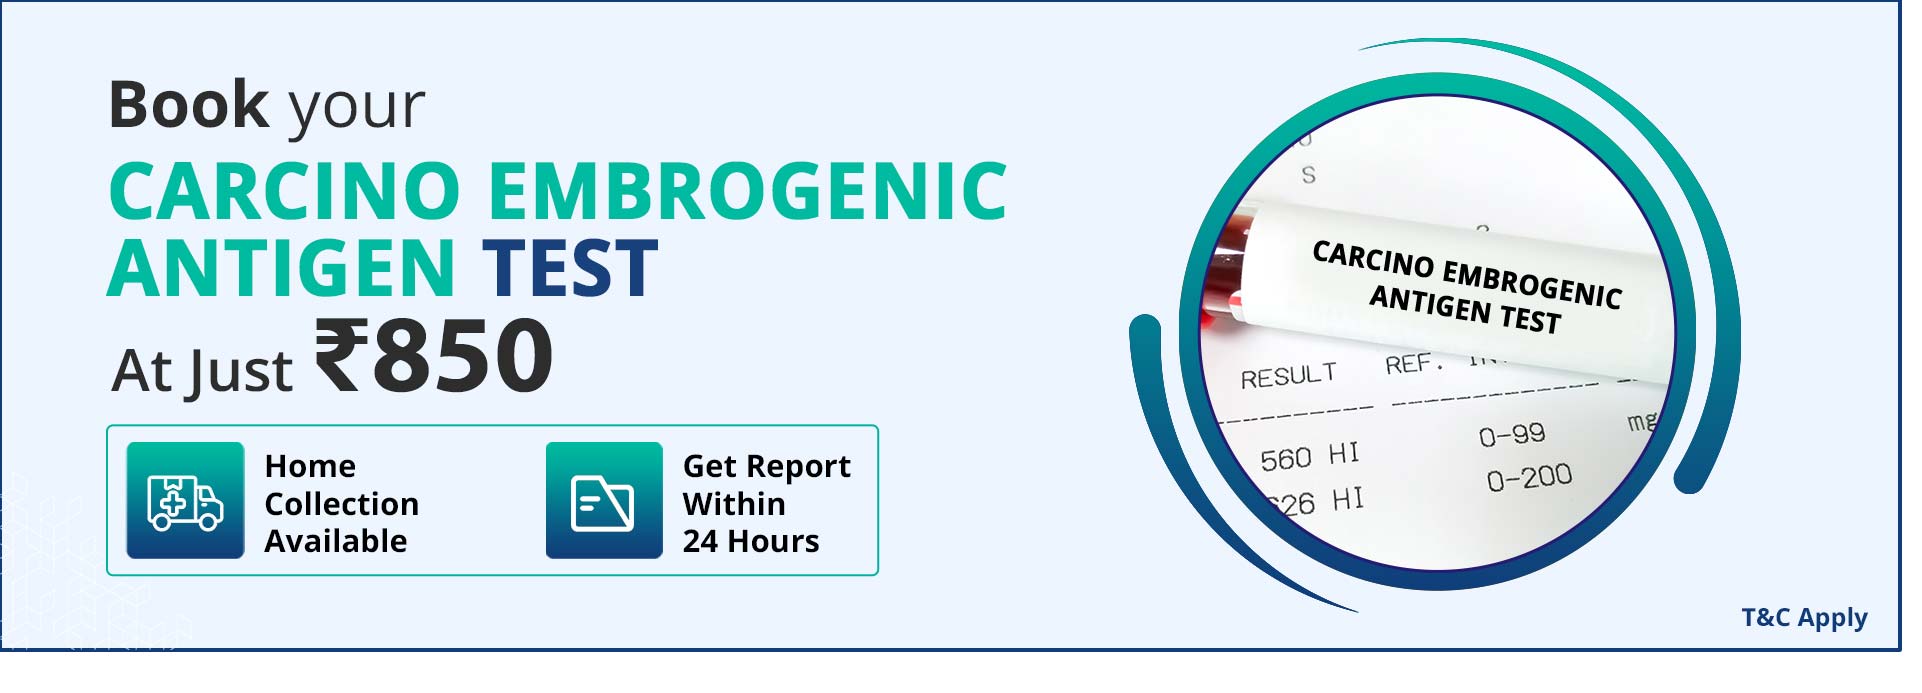 Carcino embrogenic antigen test